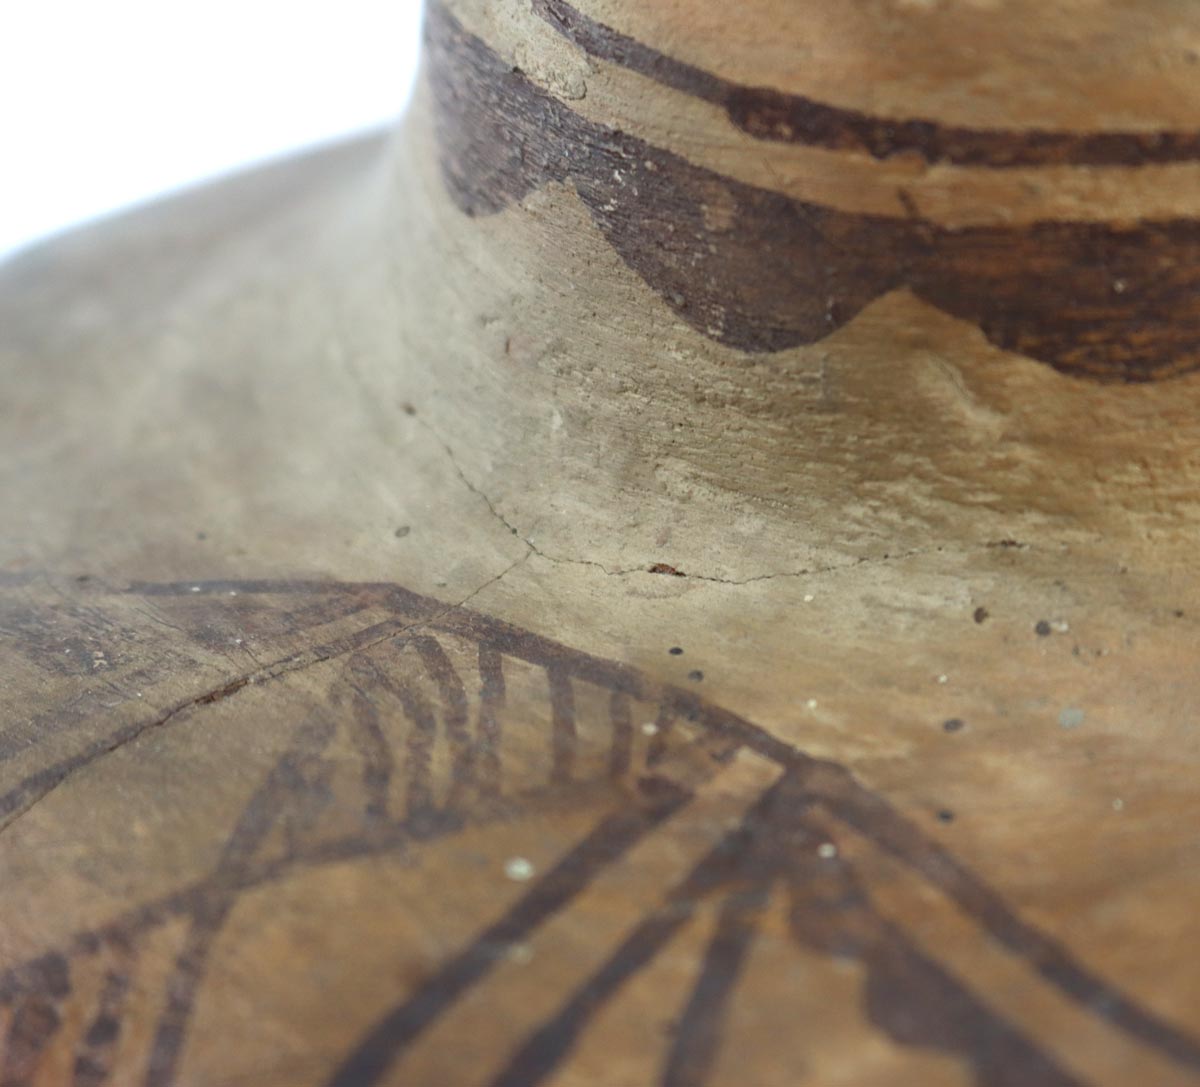 Polacca/Hopi Polychrome Vase c. 1880s, 6.75" x 10" (P3804-002)